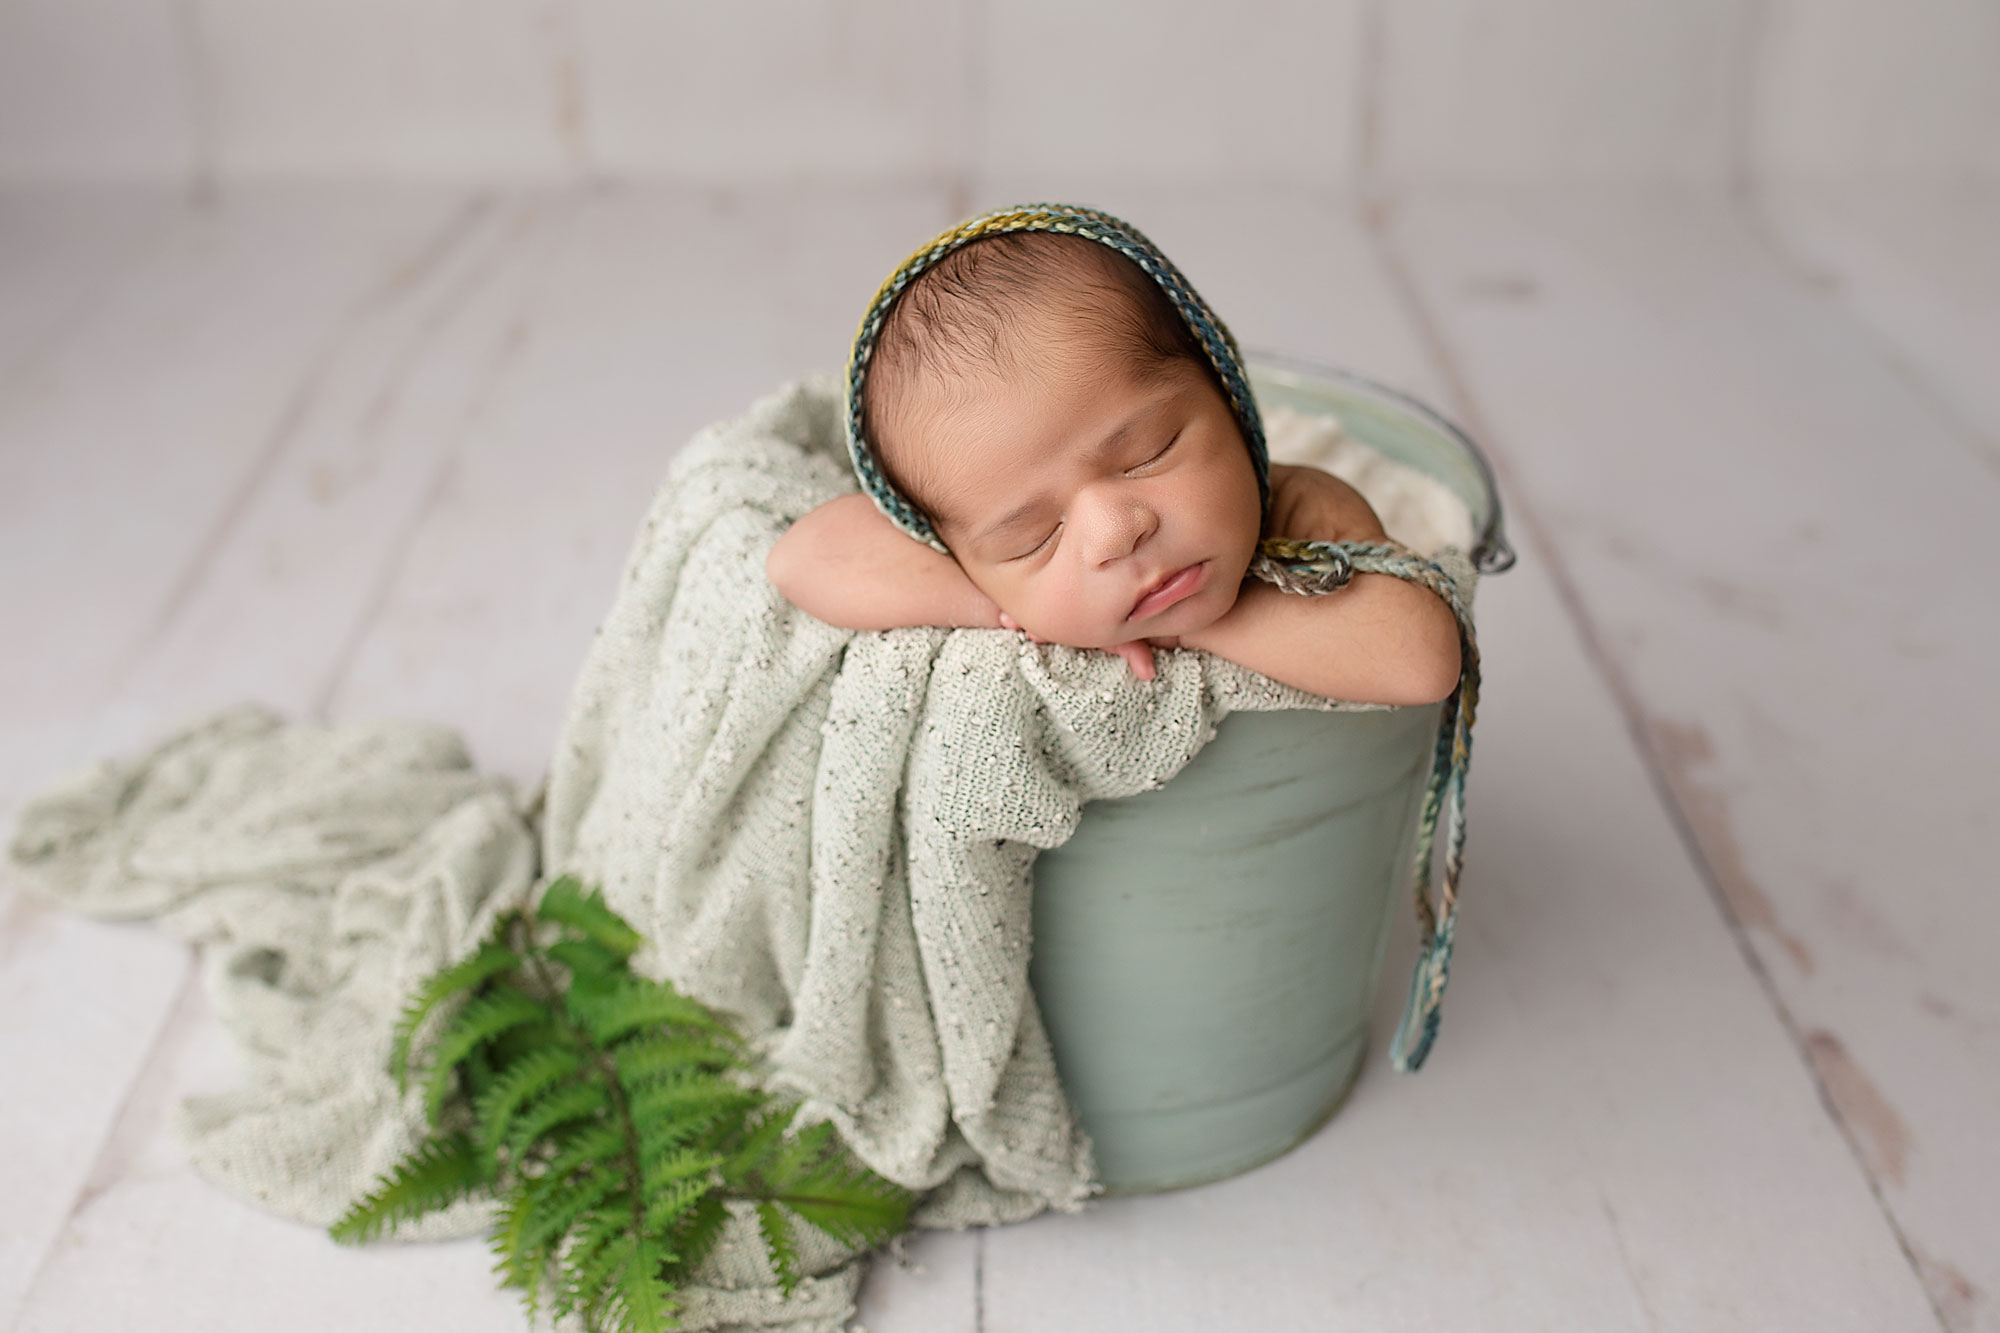 somerset county newborn photography